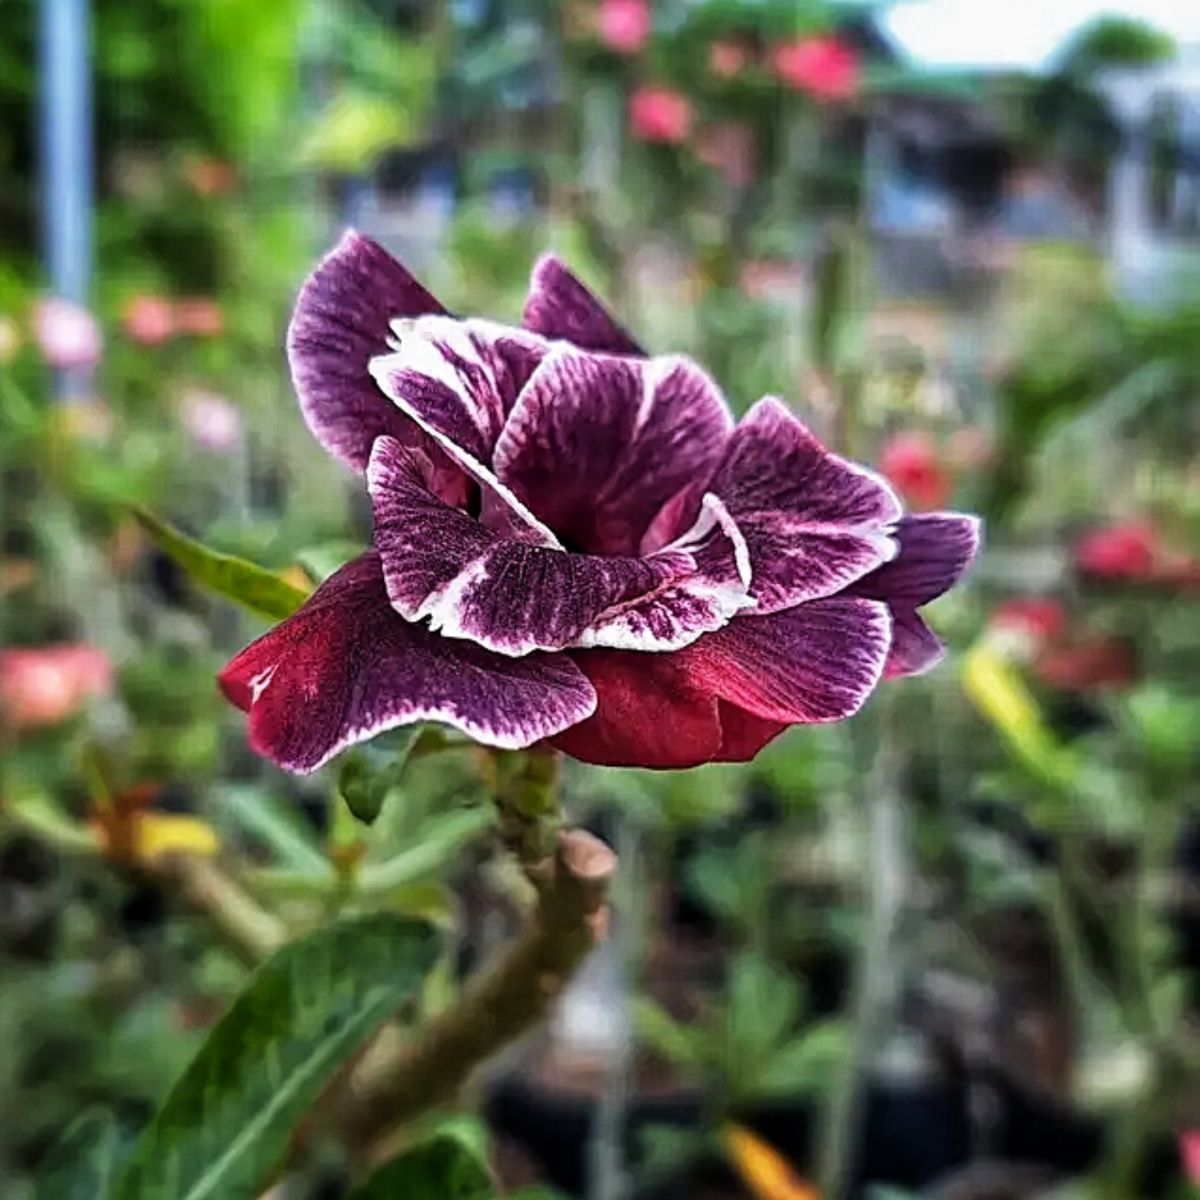 A purple flowering desert rose